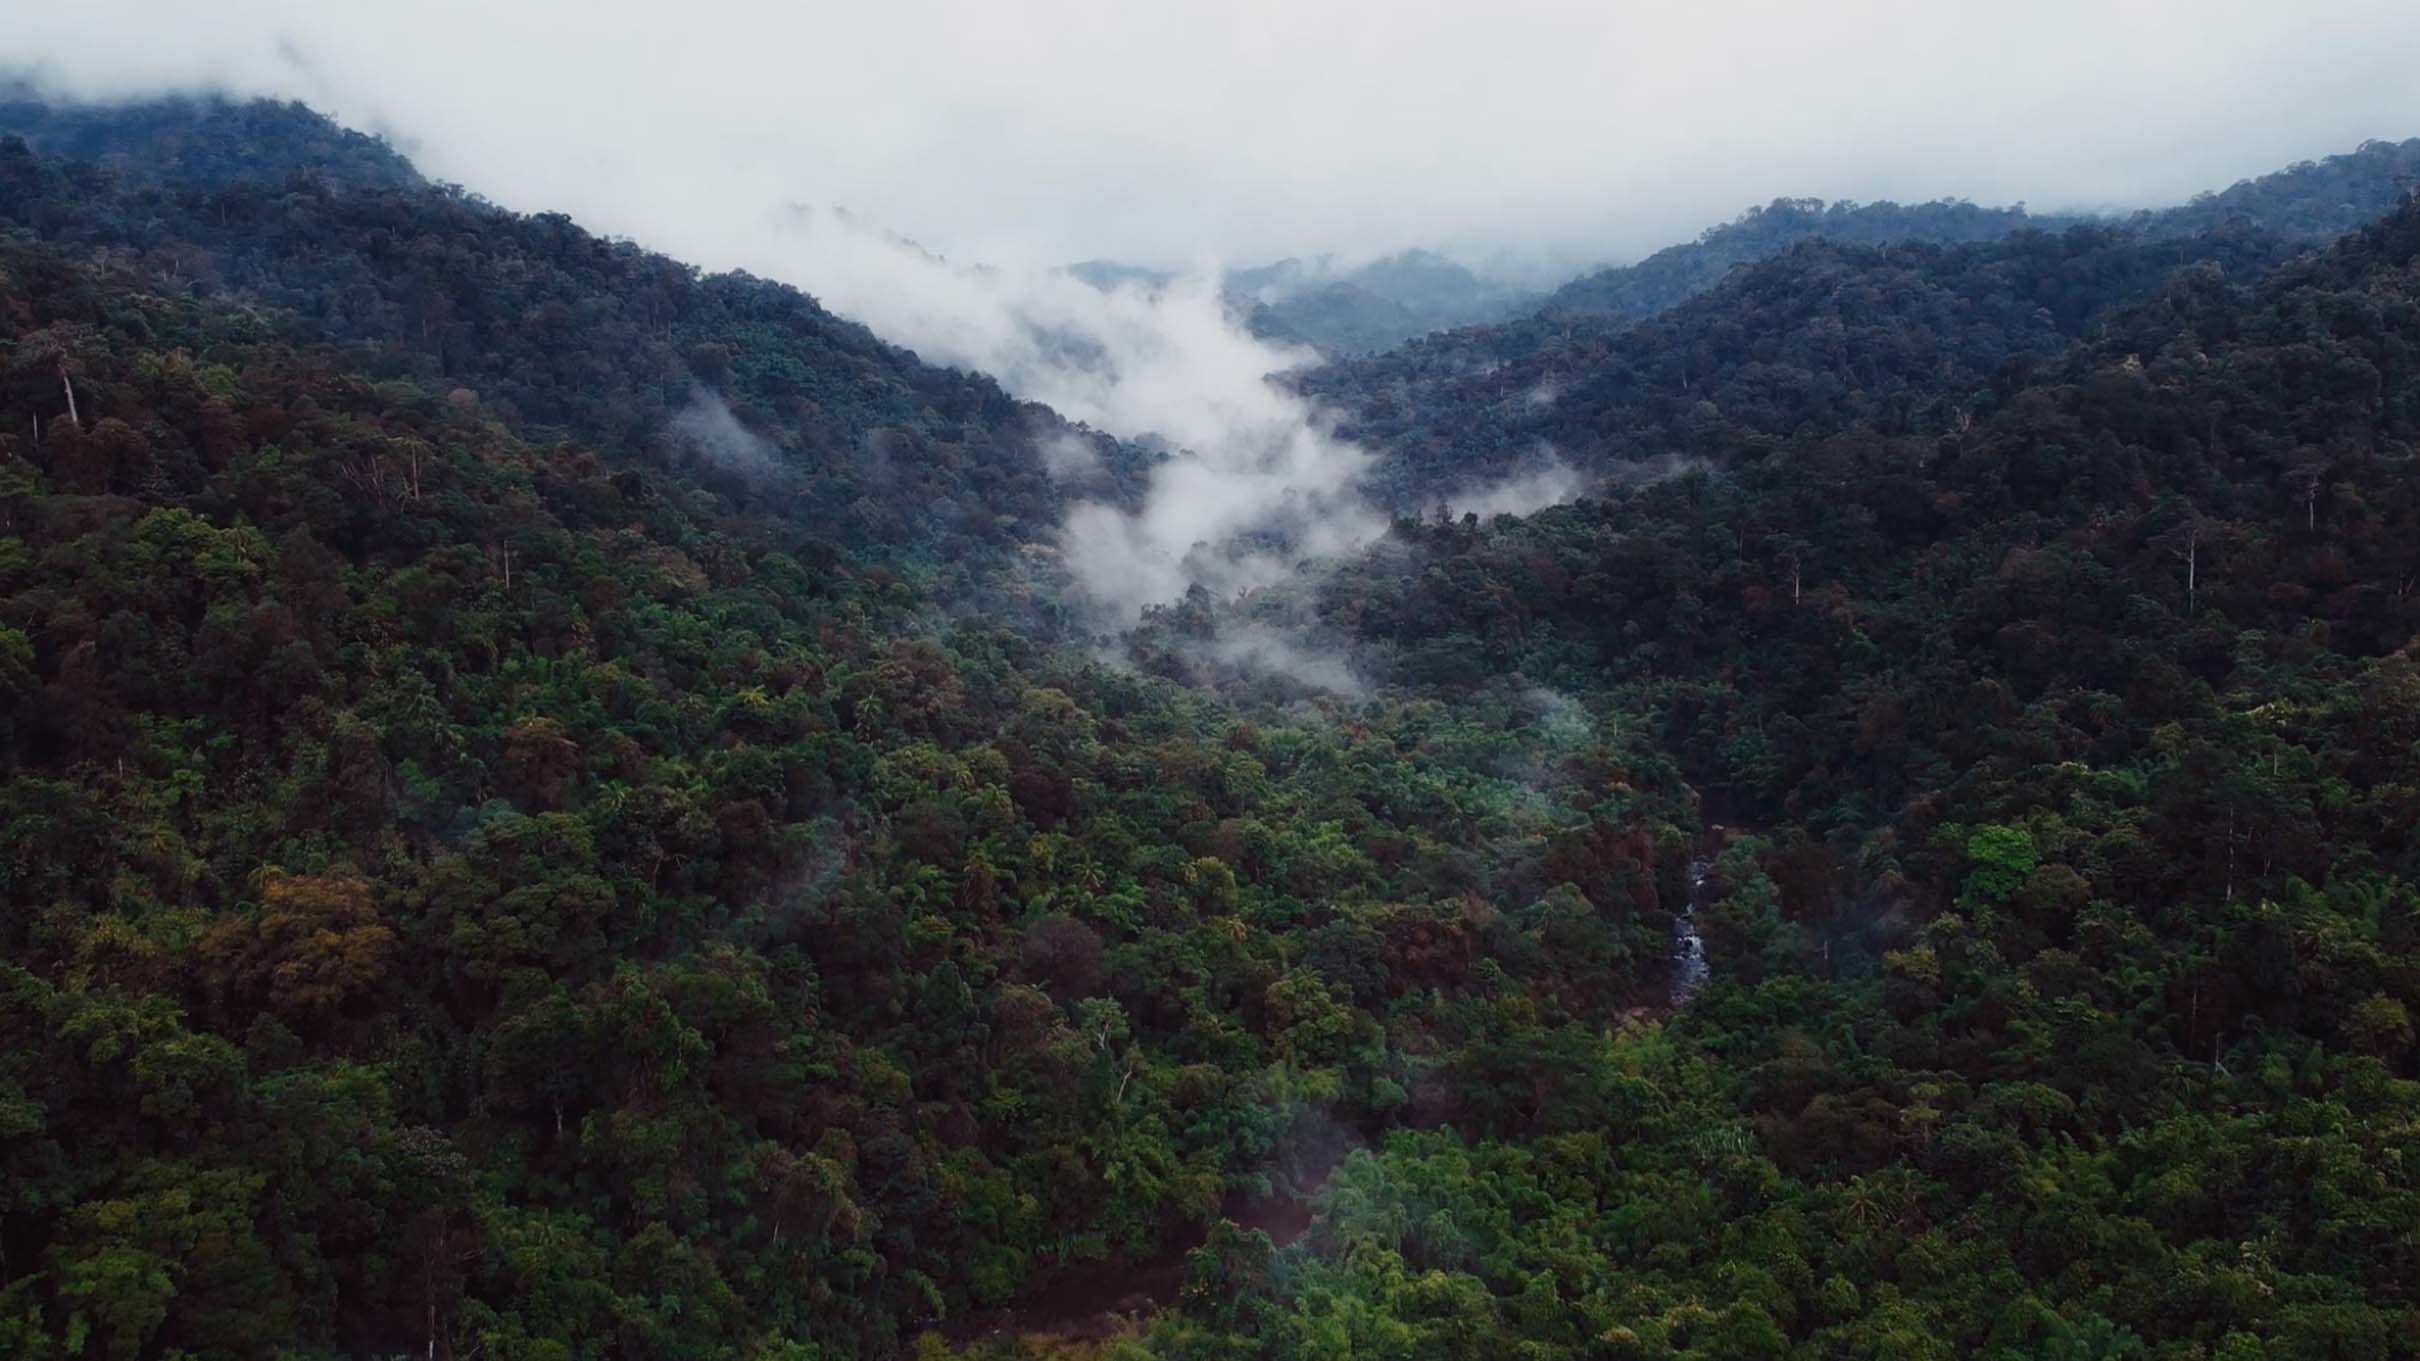 Rainforest with rising mist